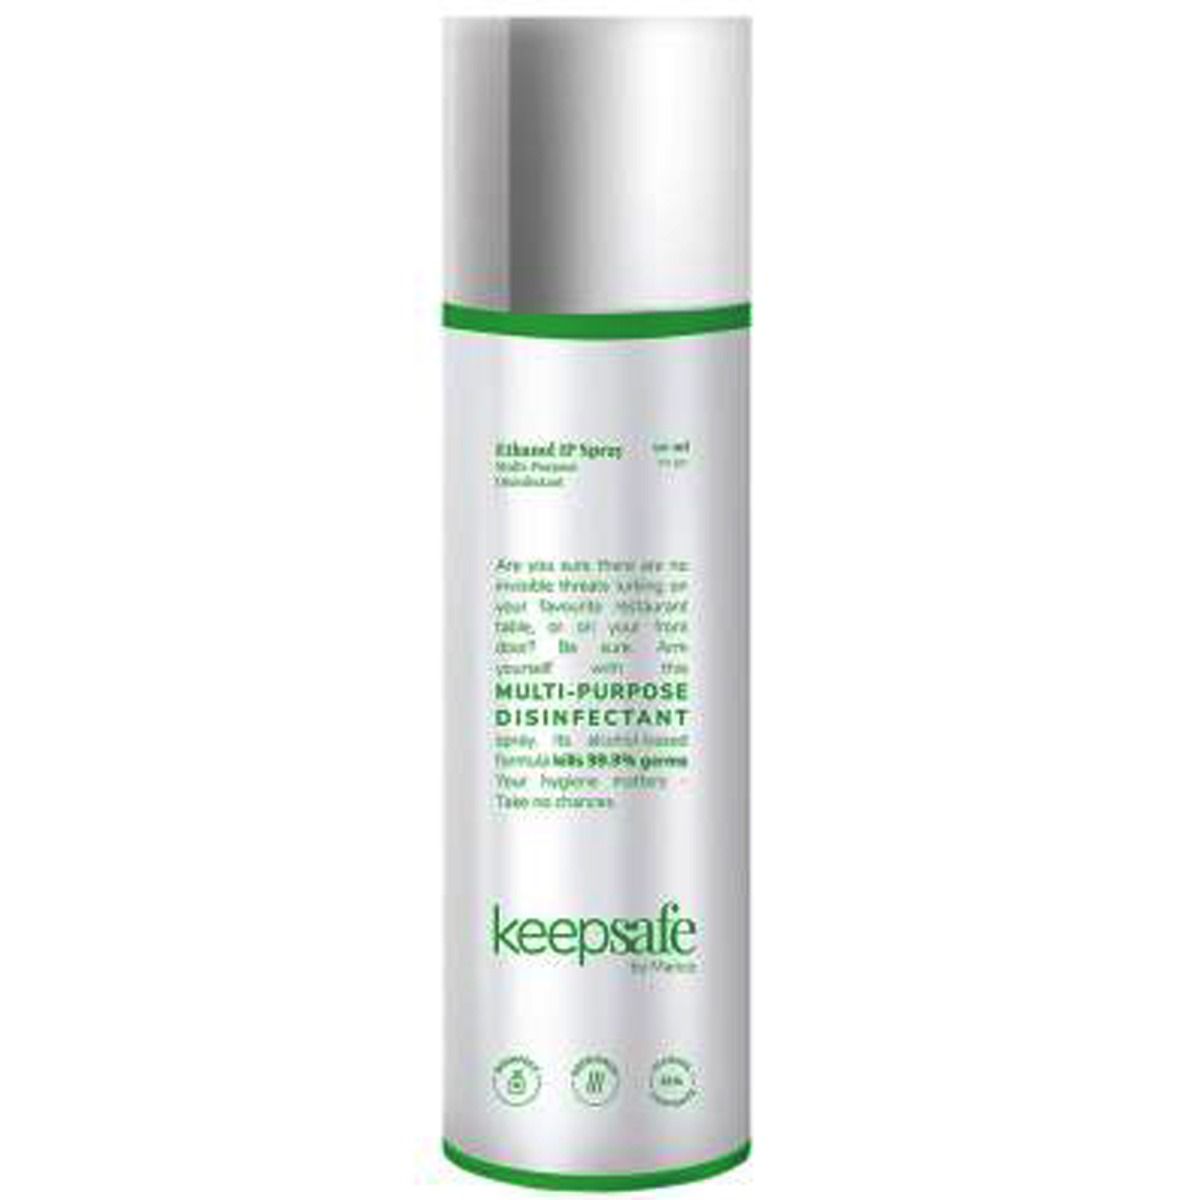 KeepSafe Multi-Purpose Disinfectant Spray, 90ml, Pack of 1 